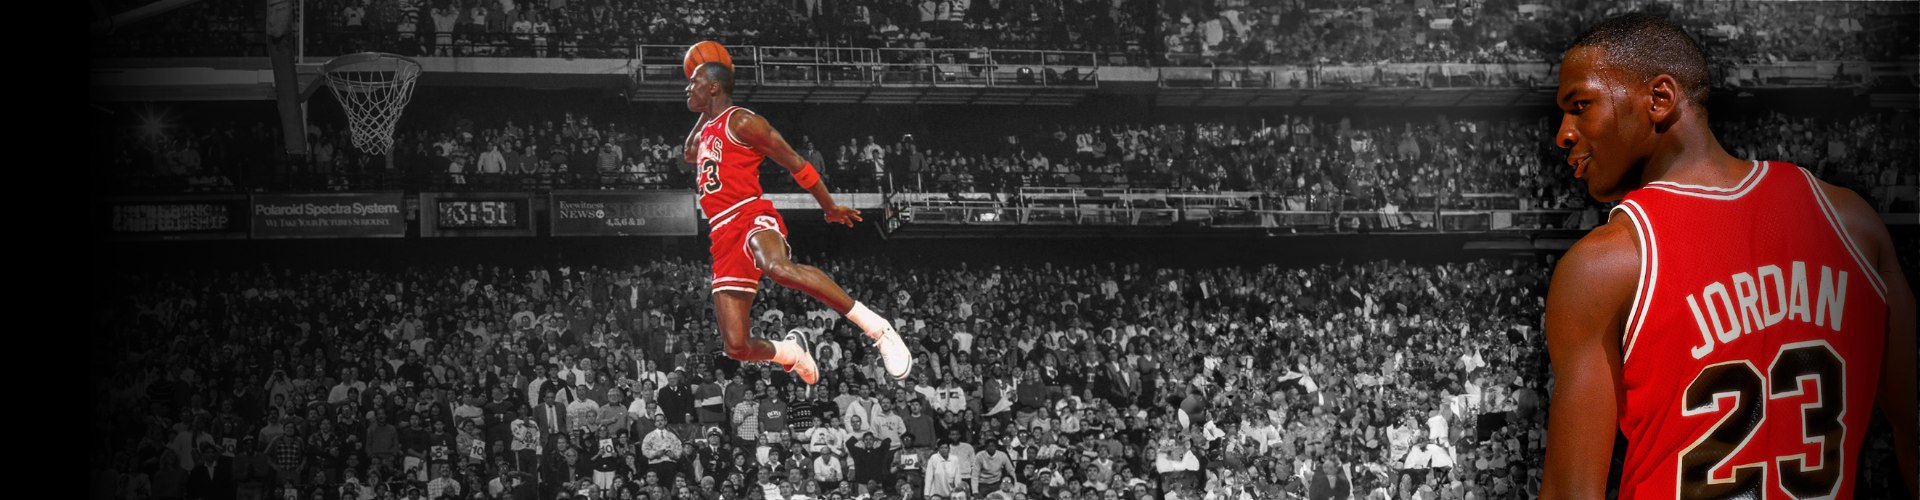 Michael Jordan Category Image